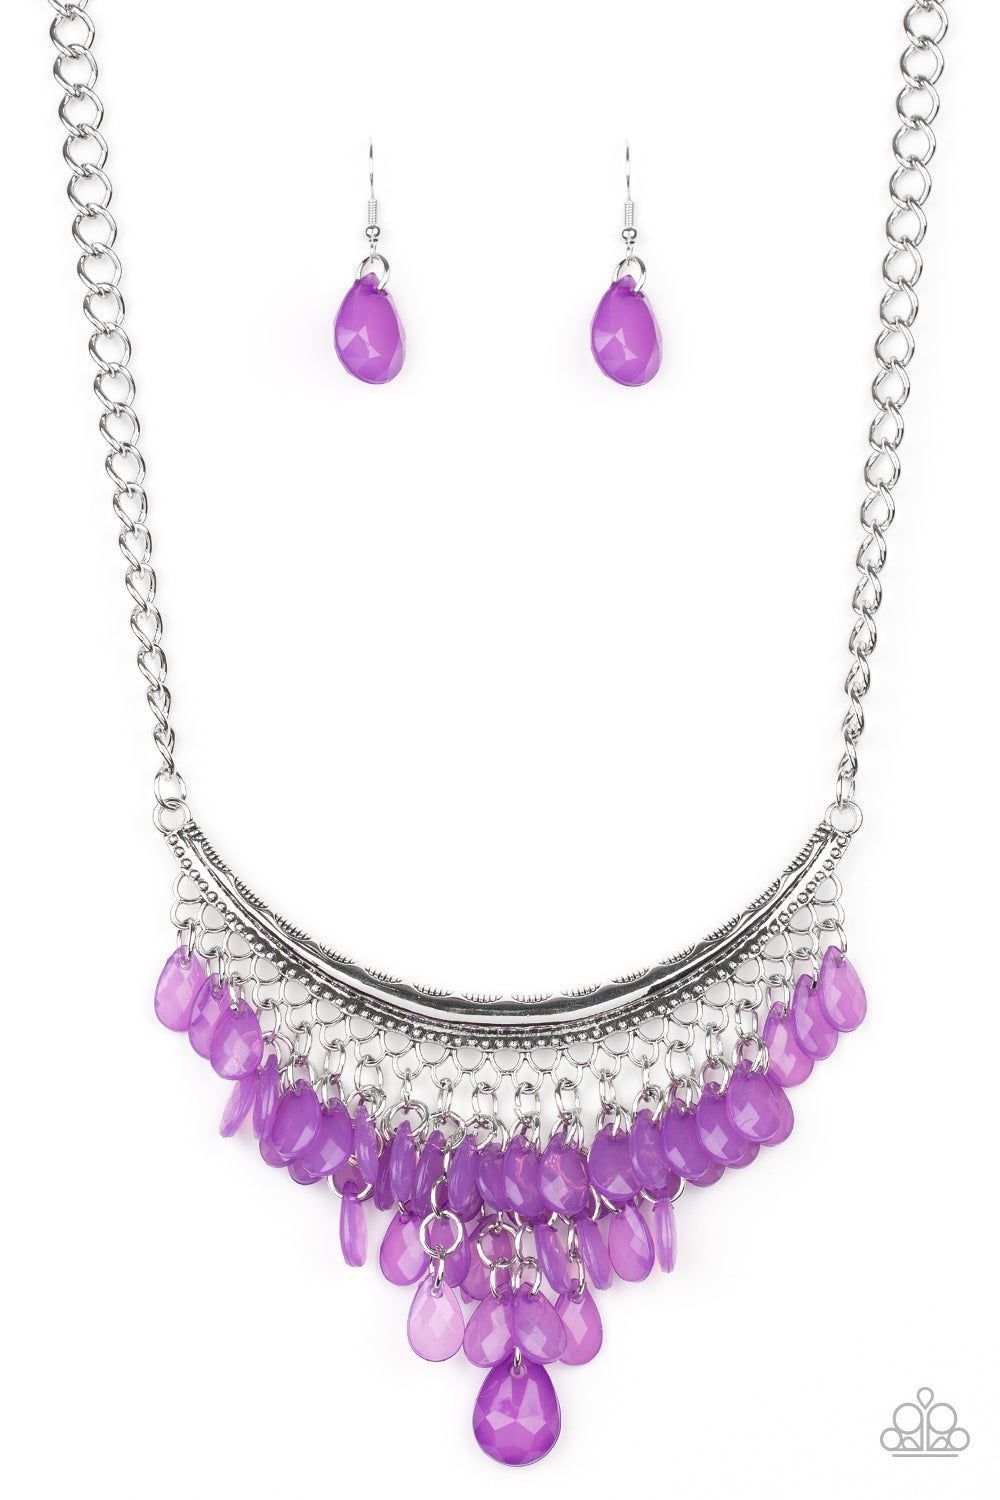 Rio Rainfall Purple Necklace - Paparazzi Accessories